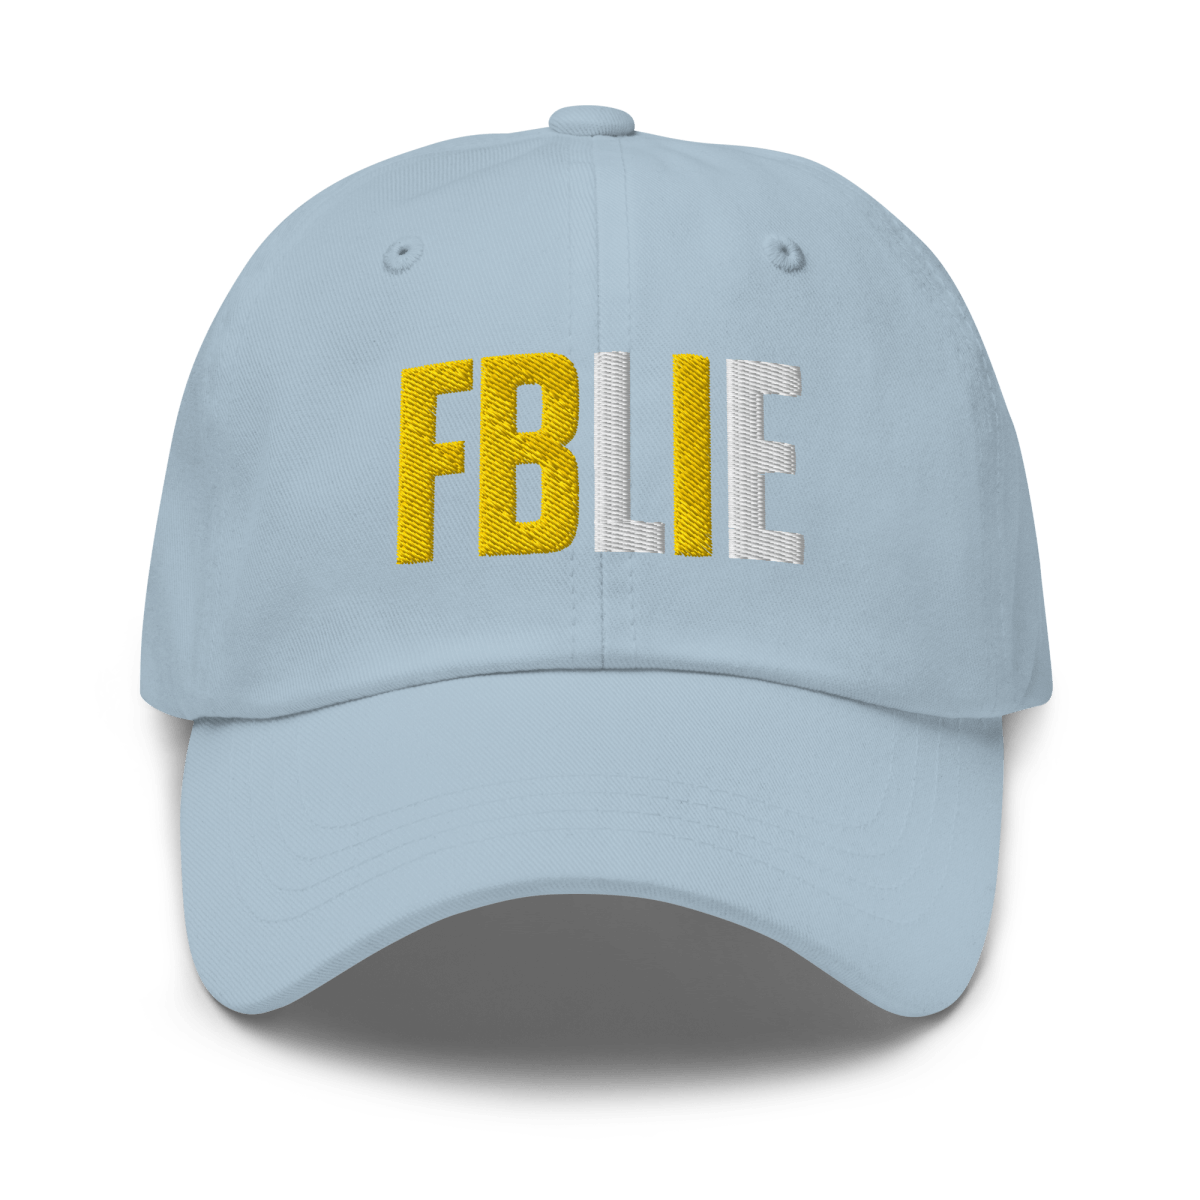 Navy Blue FBI / FBLIE Hat